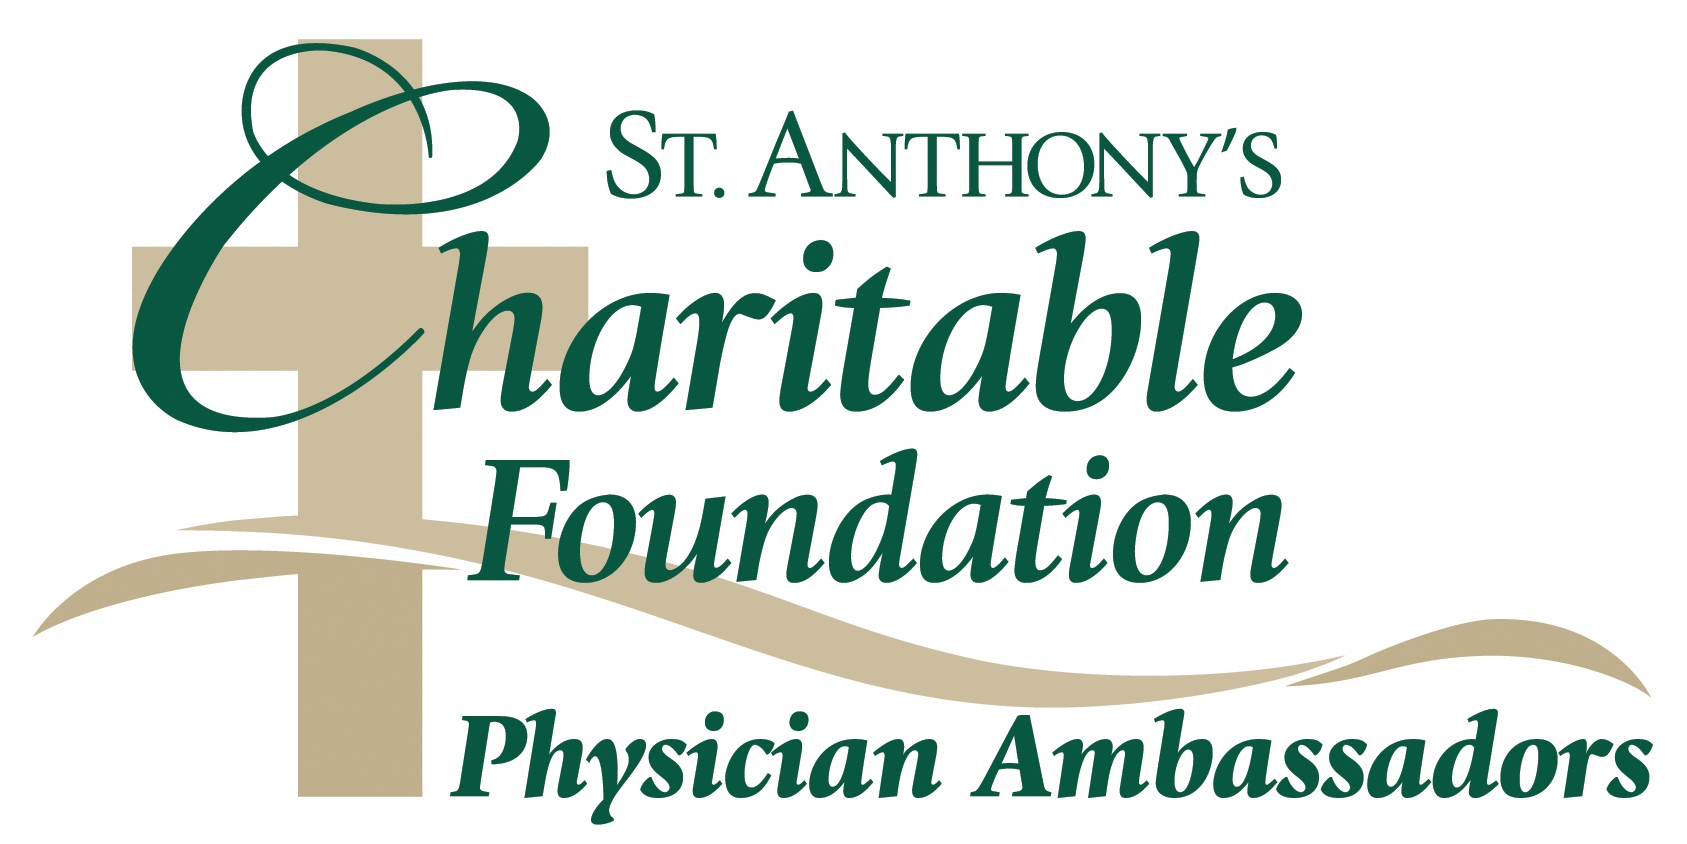 St. Anthony's Charitable Foundation Physician Ambassadors